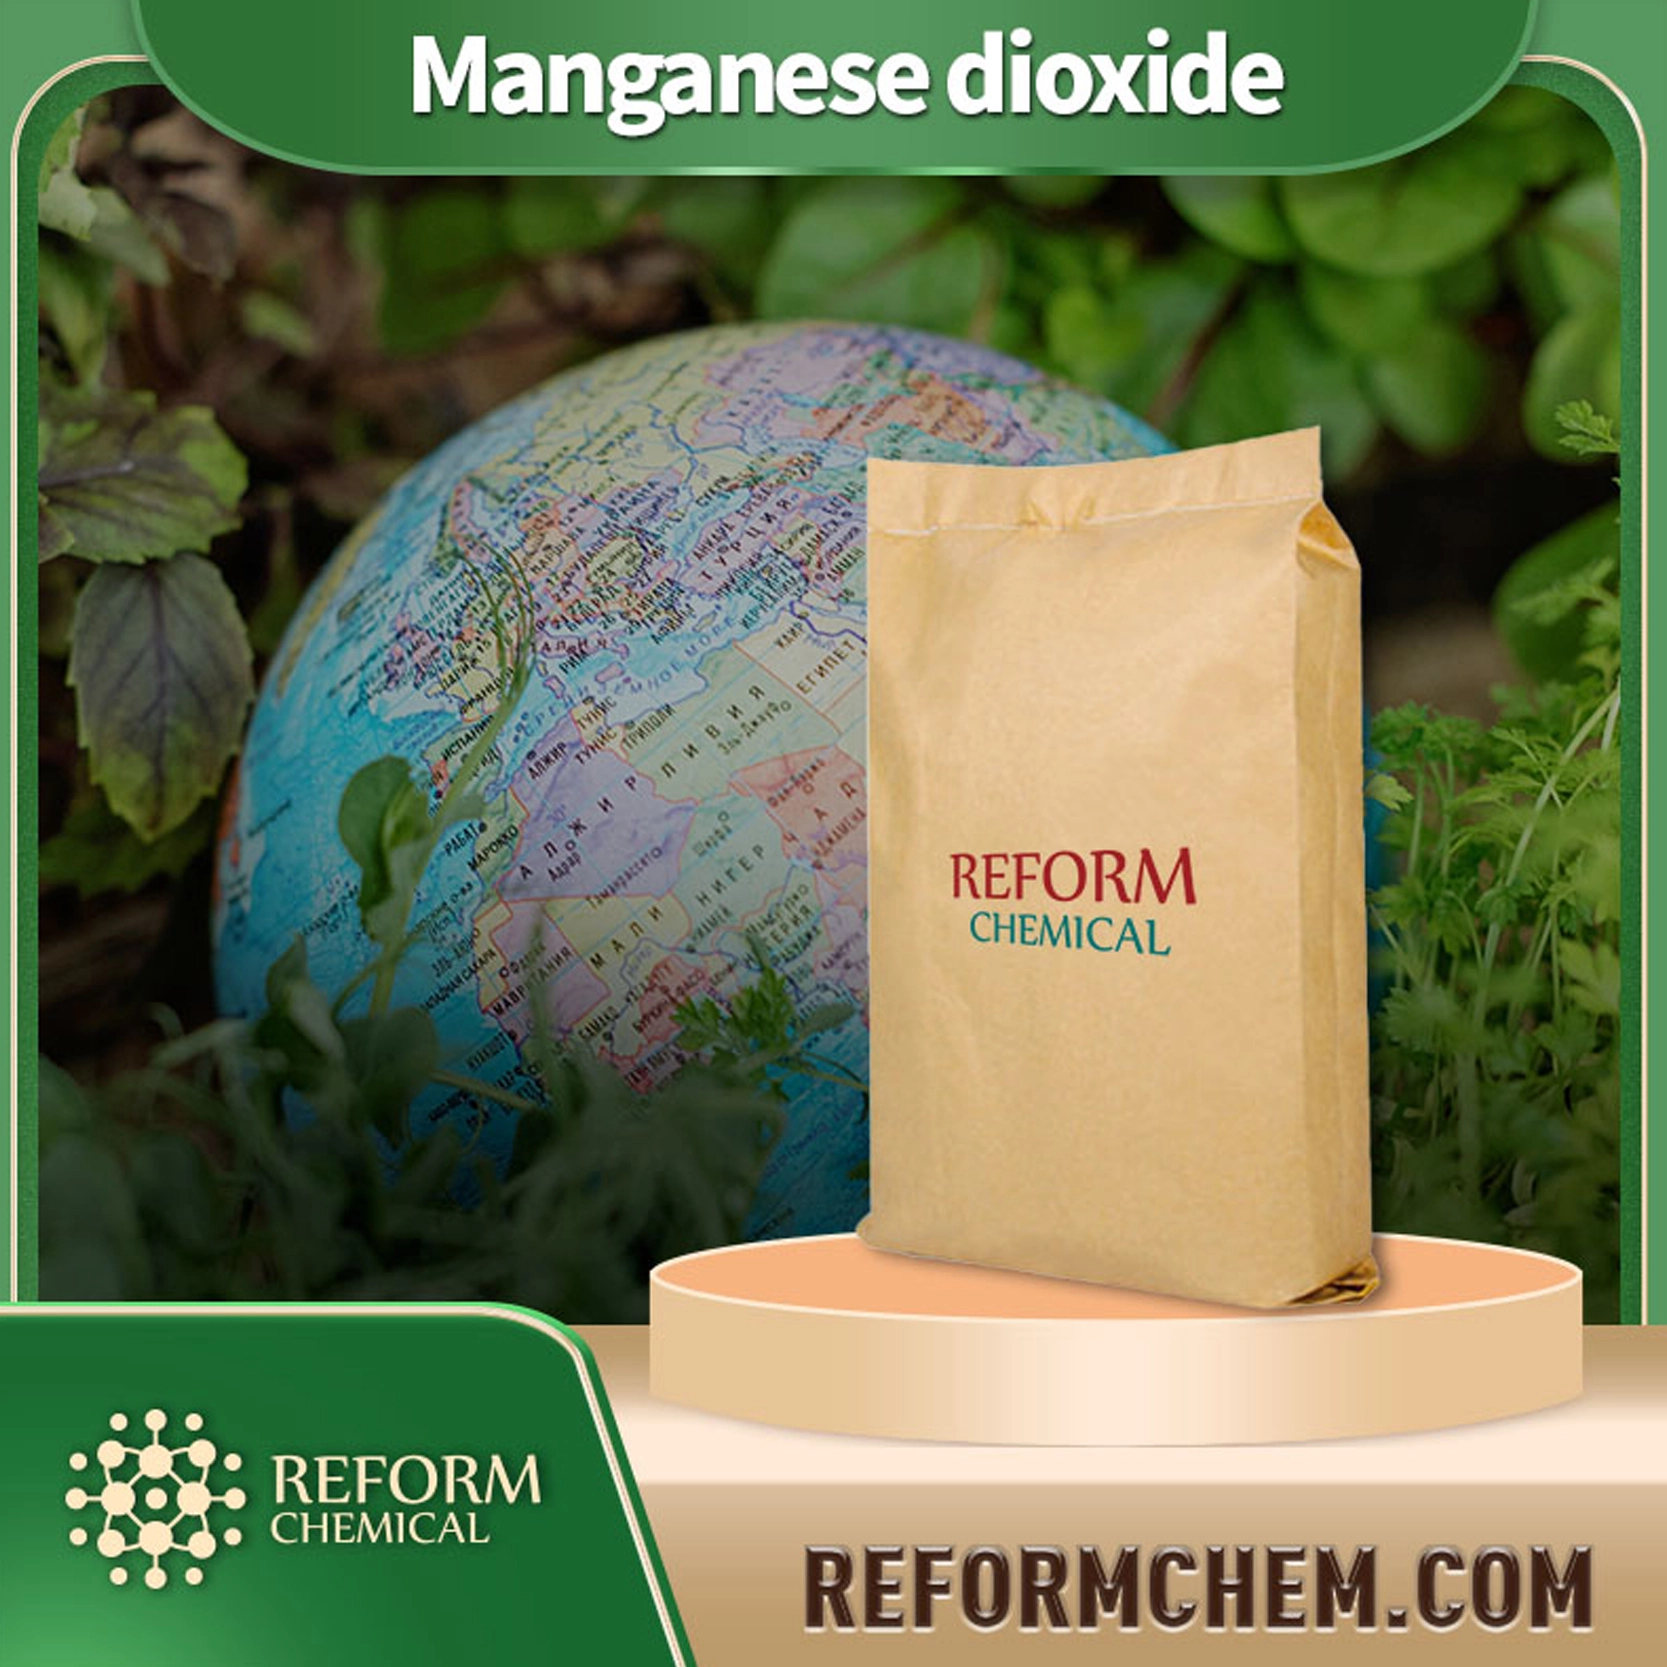 manganese dioxide1313 13 9